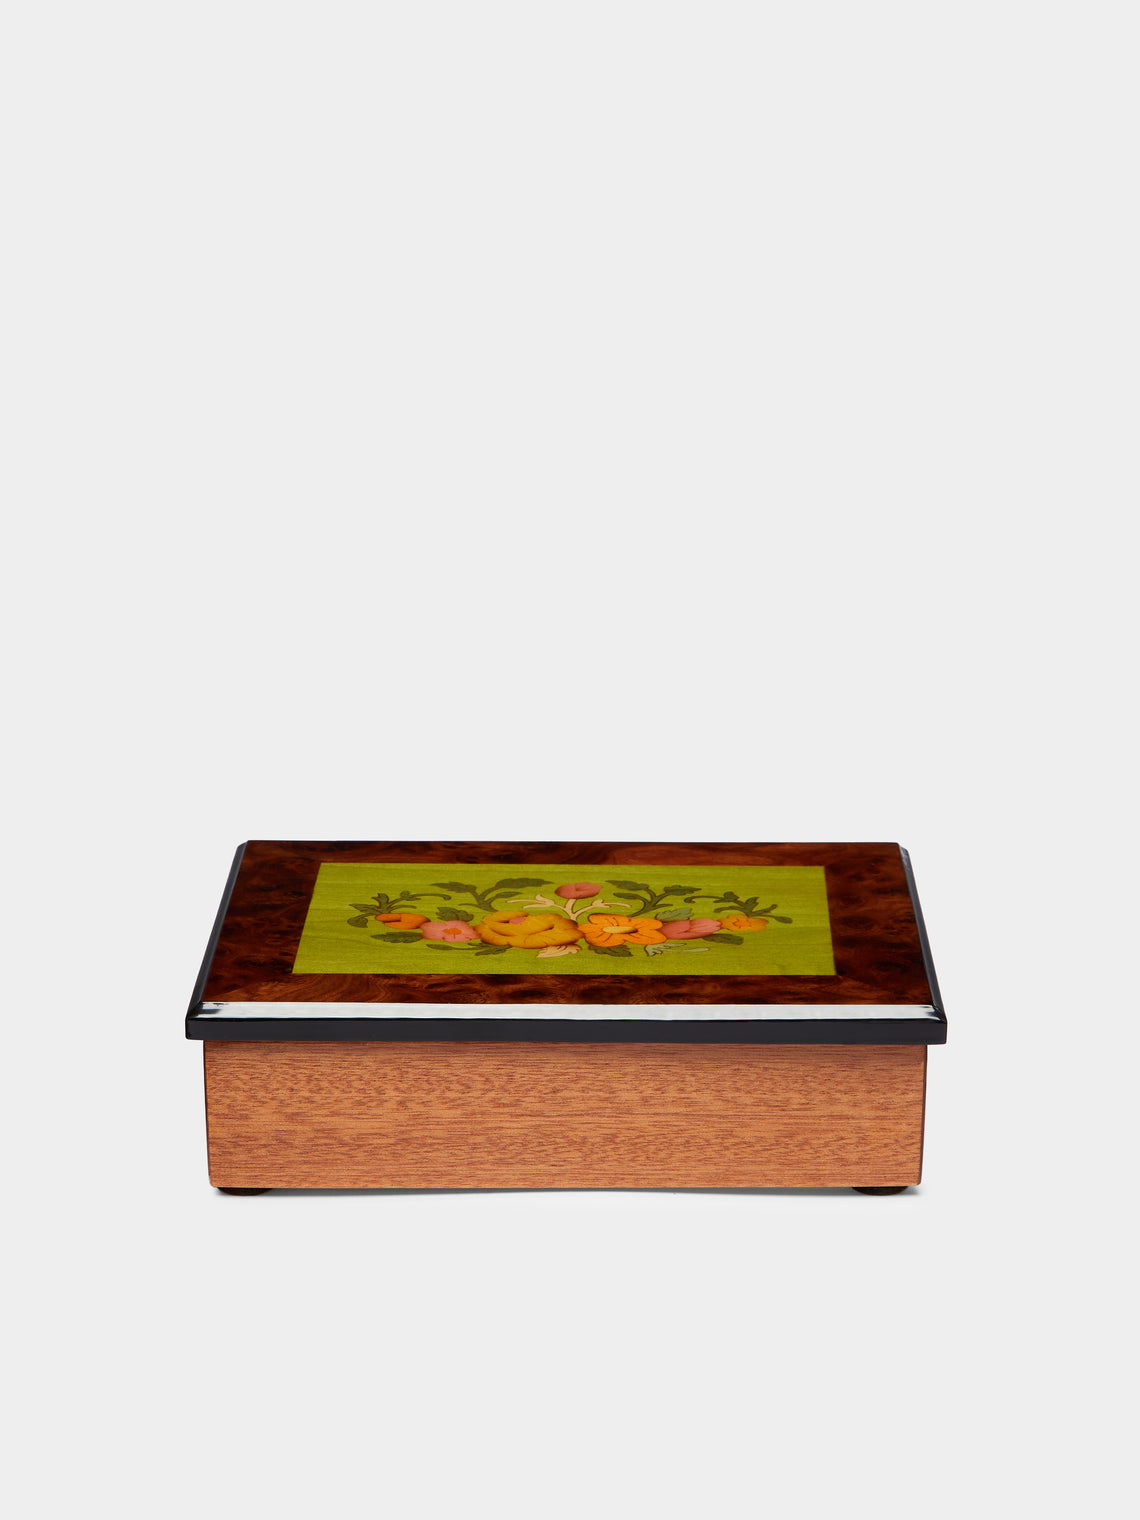 Biagio Barile - Flowers Wood Inlay Box -  - ABASK - 